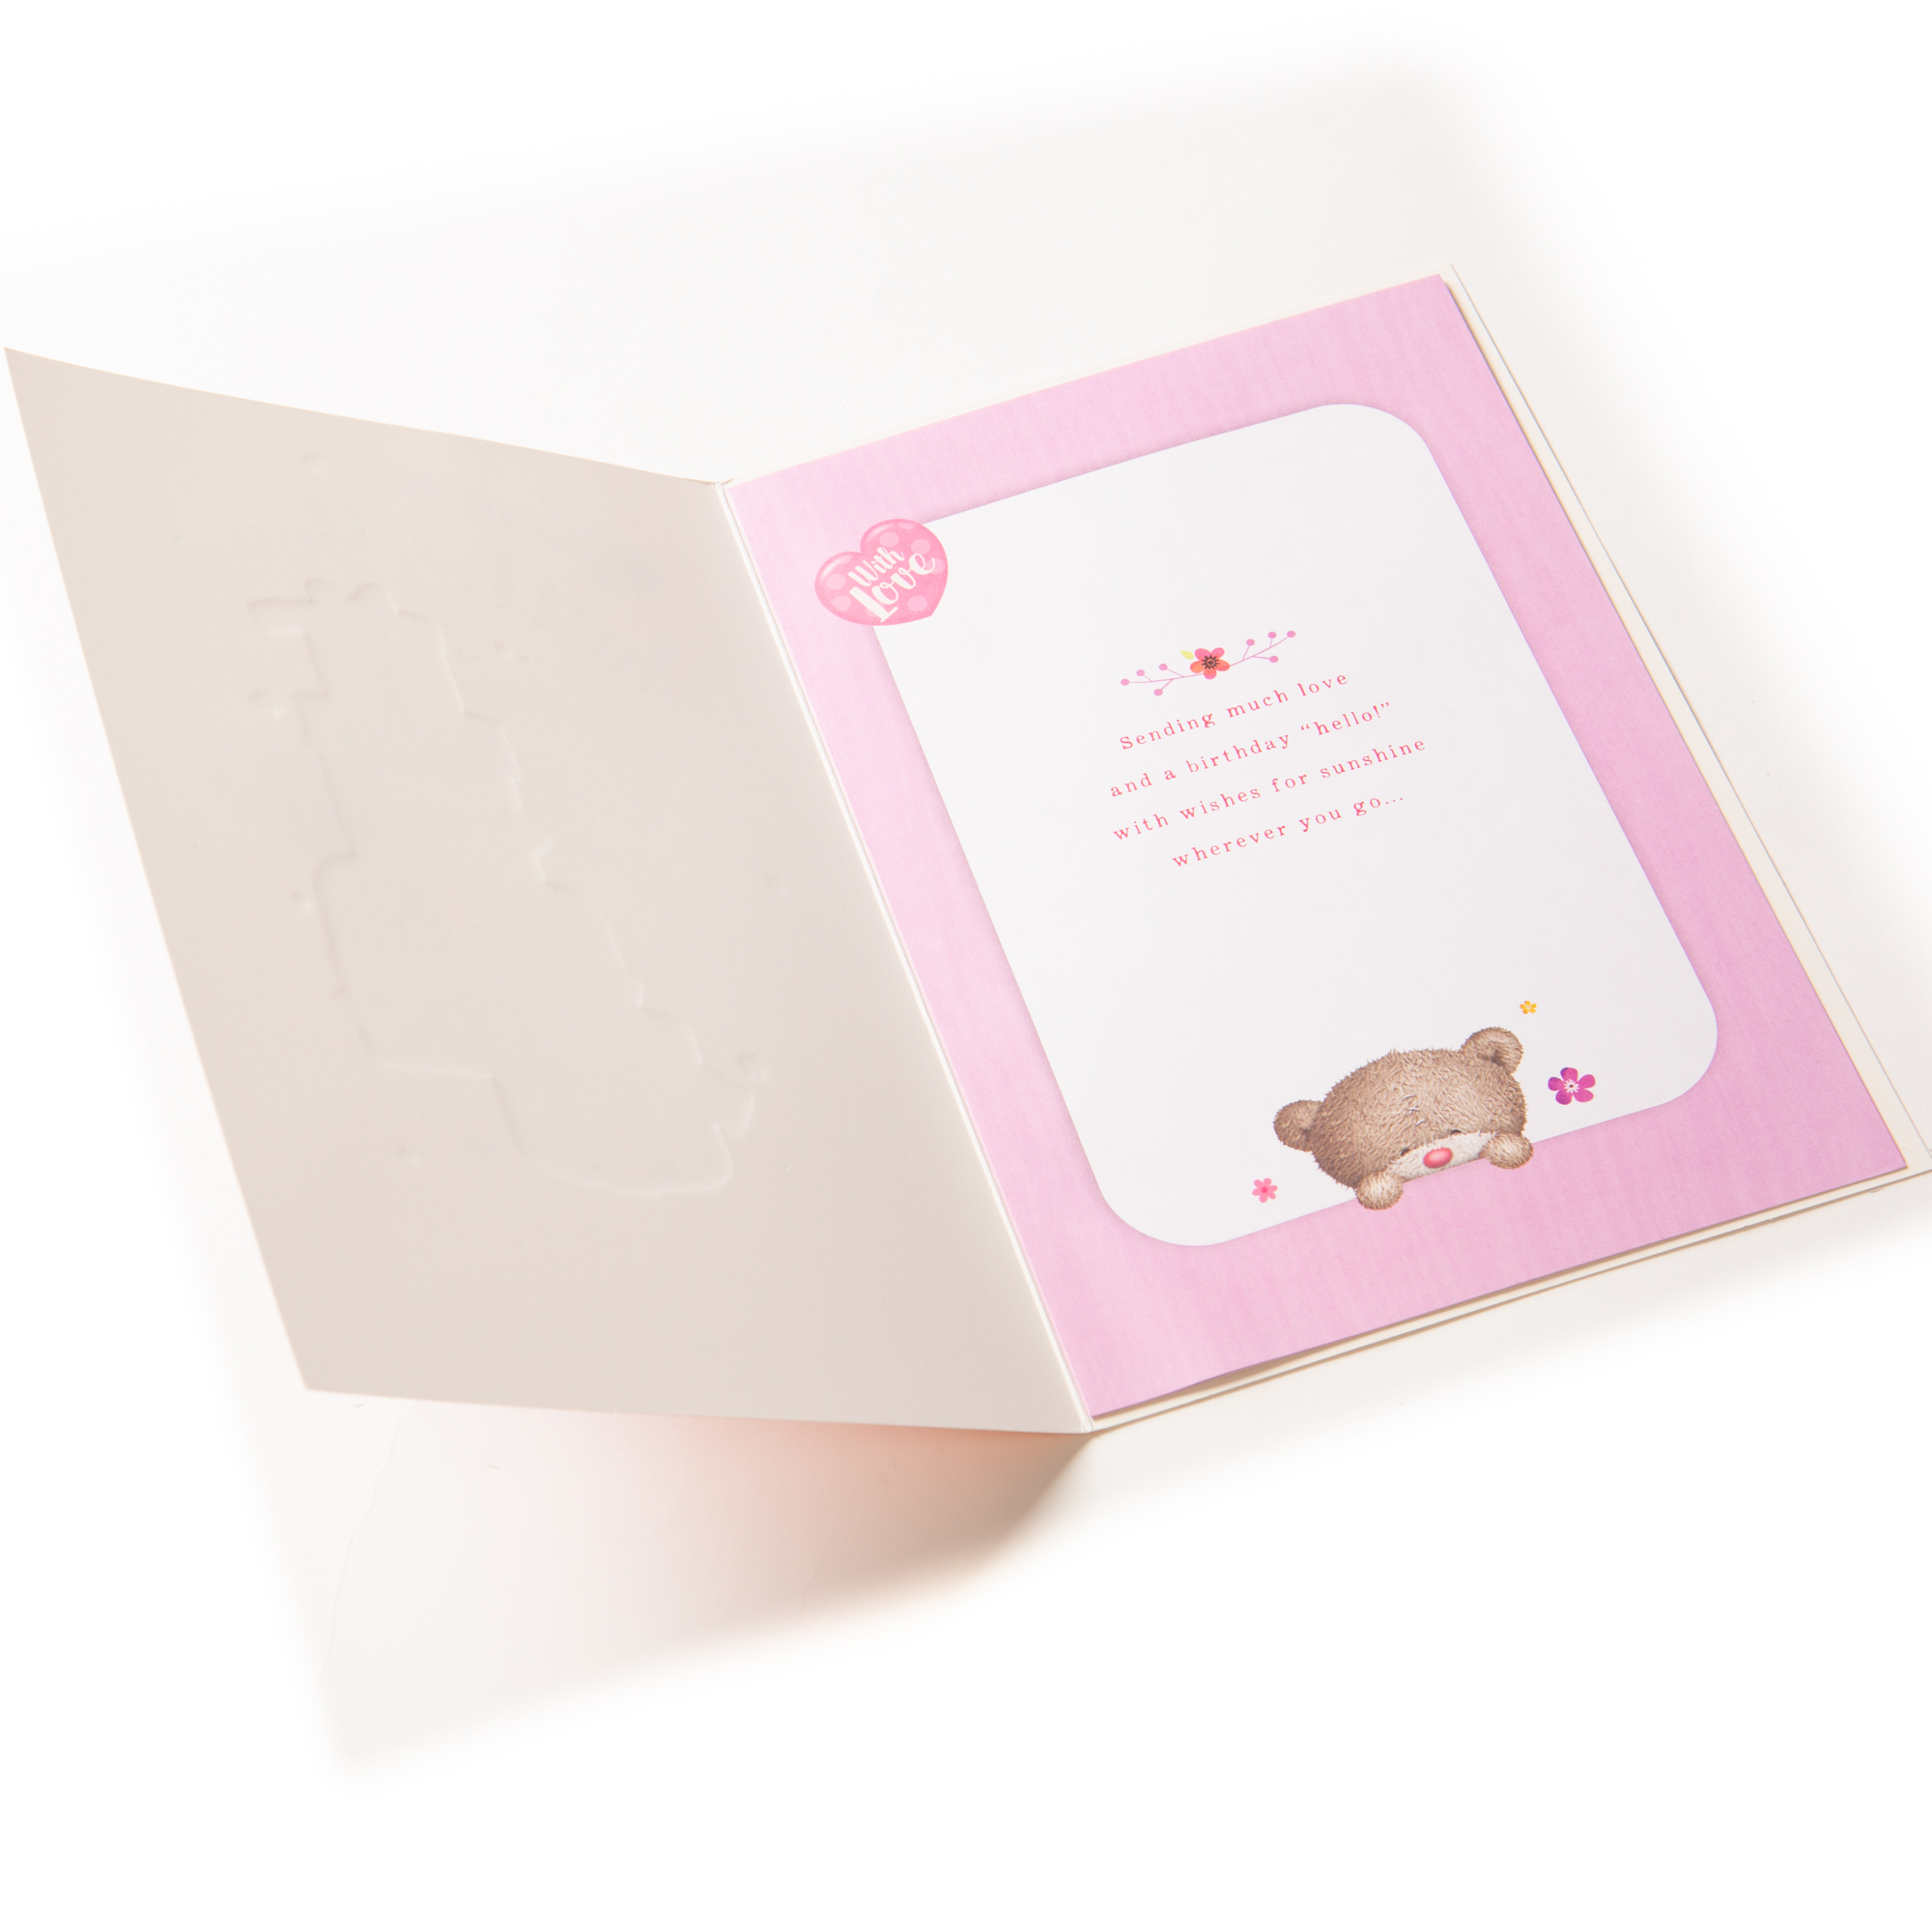 Hugs Bear Birthday Card - Just For You Cute